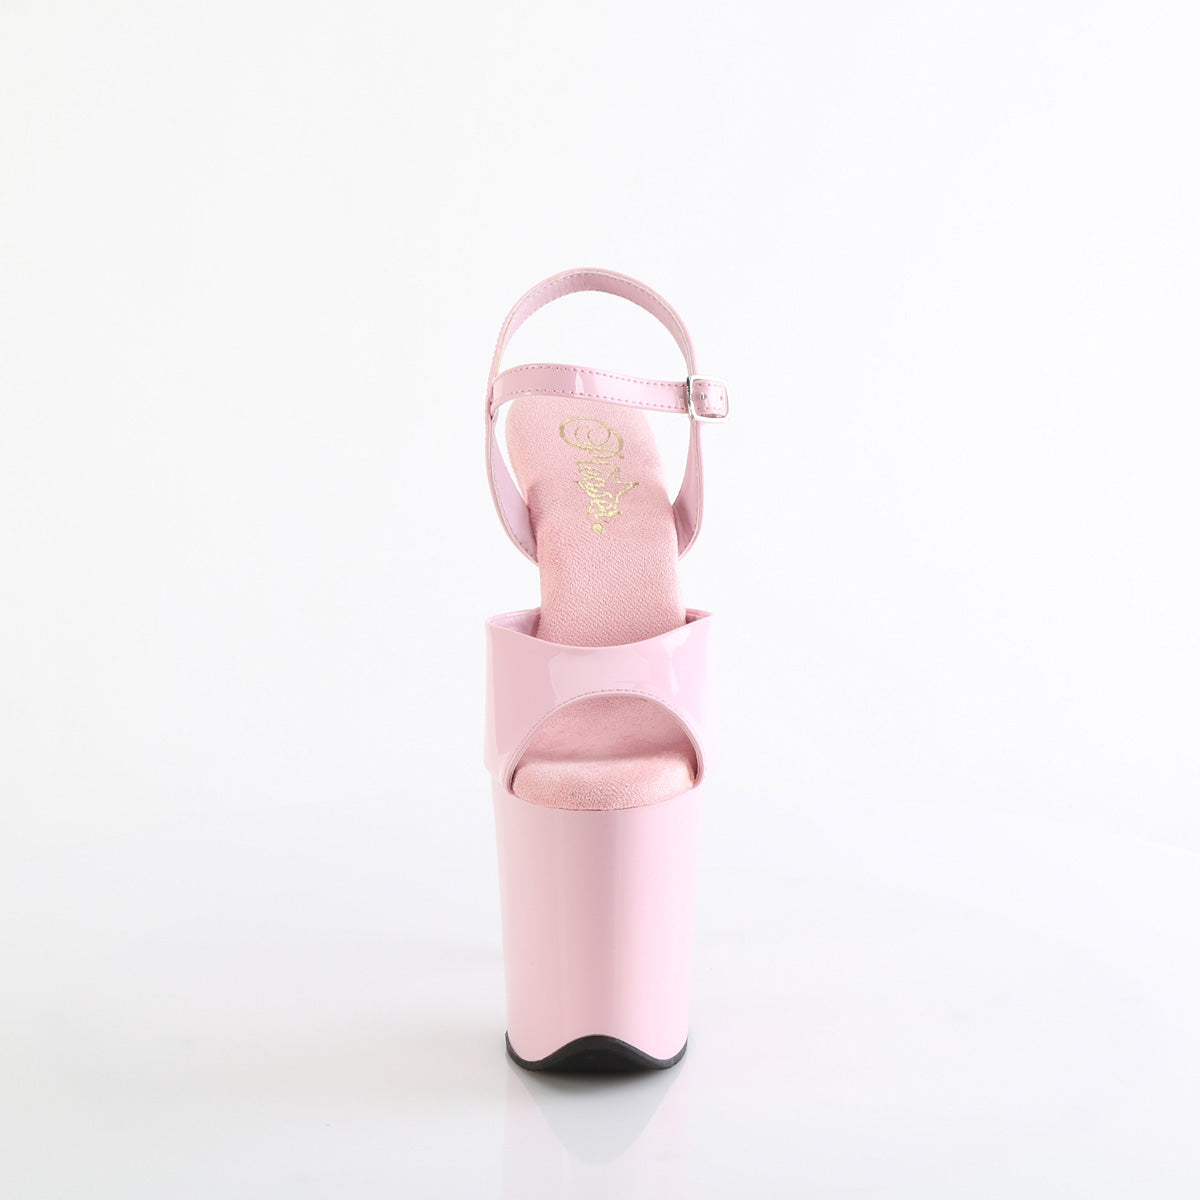 8 Inch Heel FLAMINGO-809 Baby Pink Patent